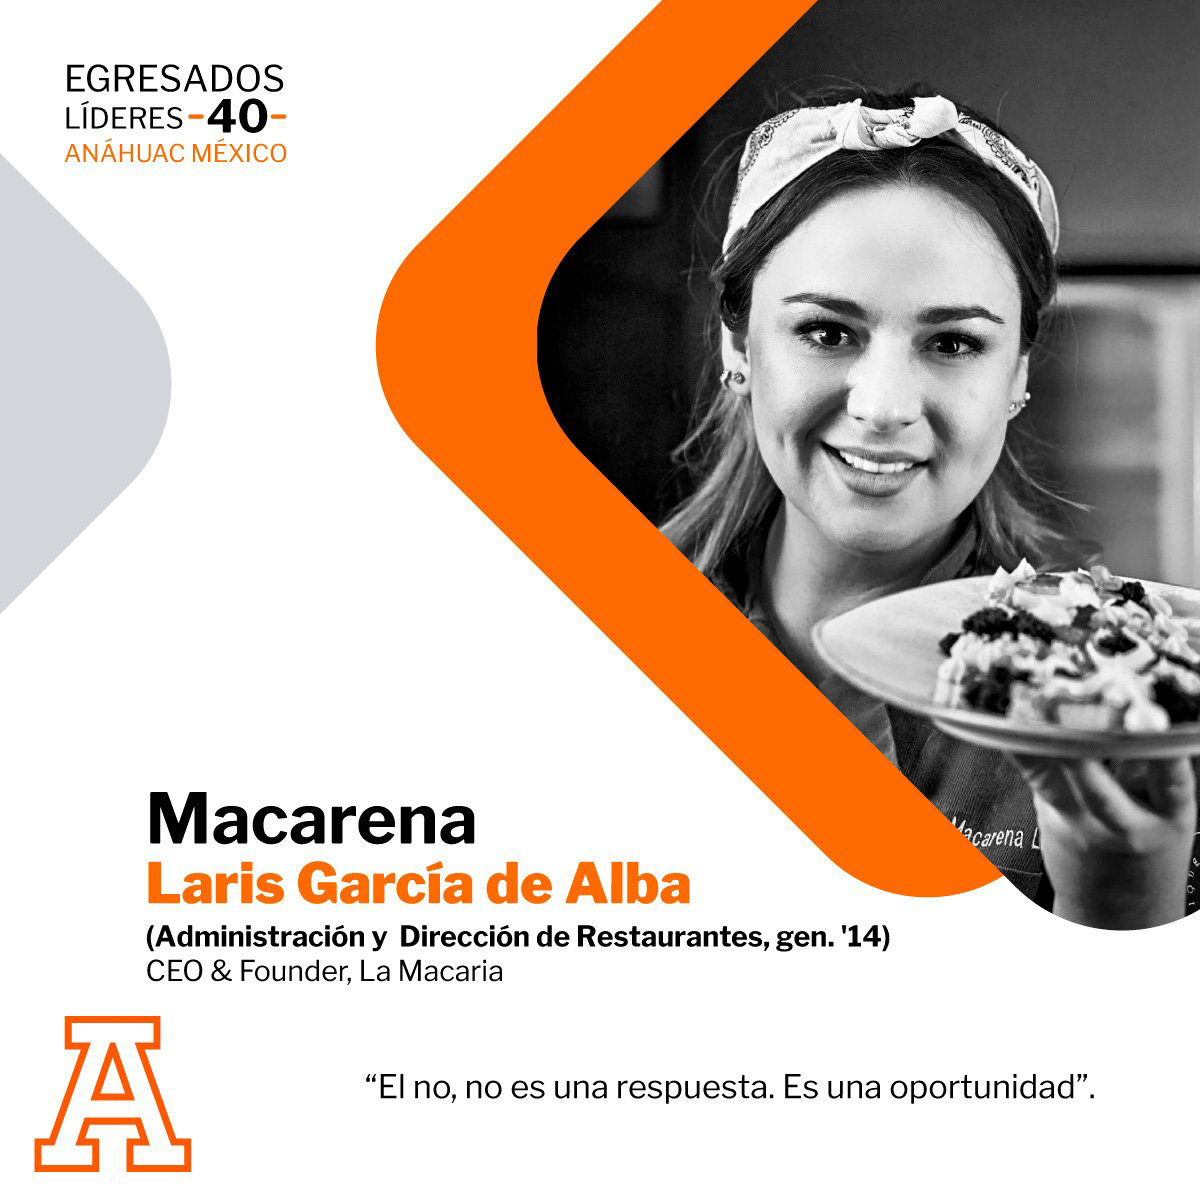 Macarena Laris Garcia